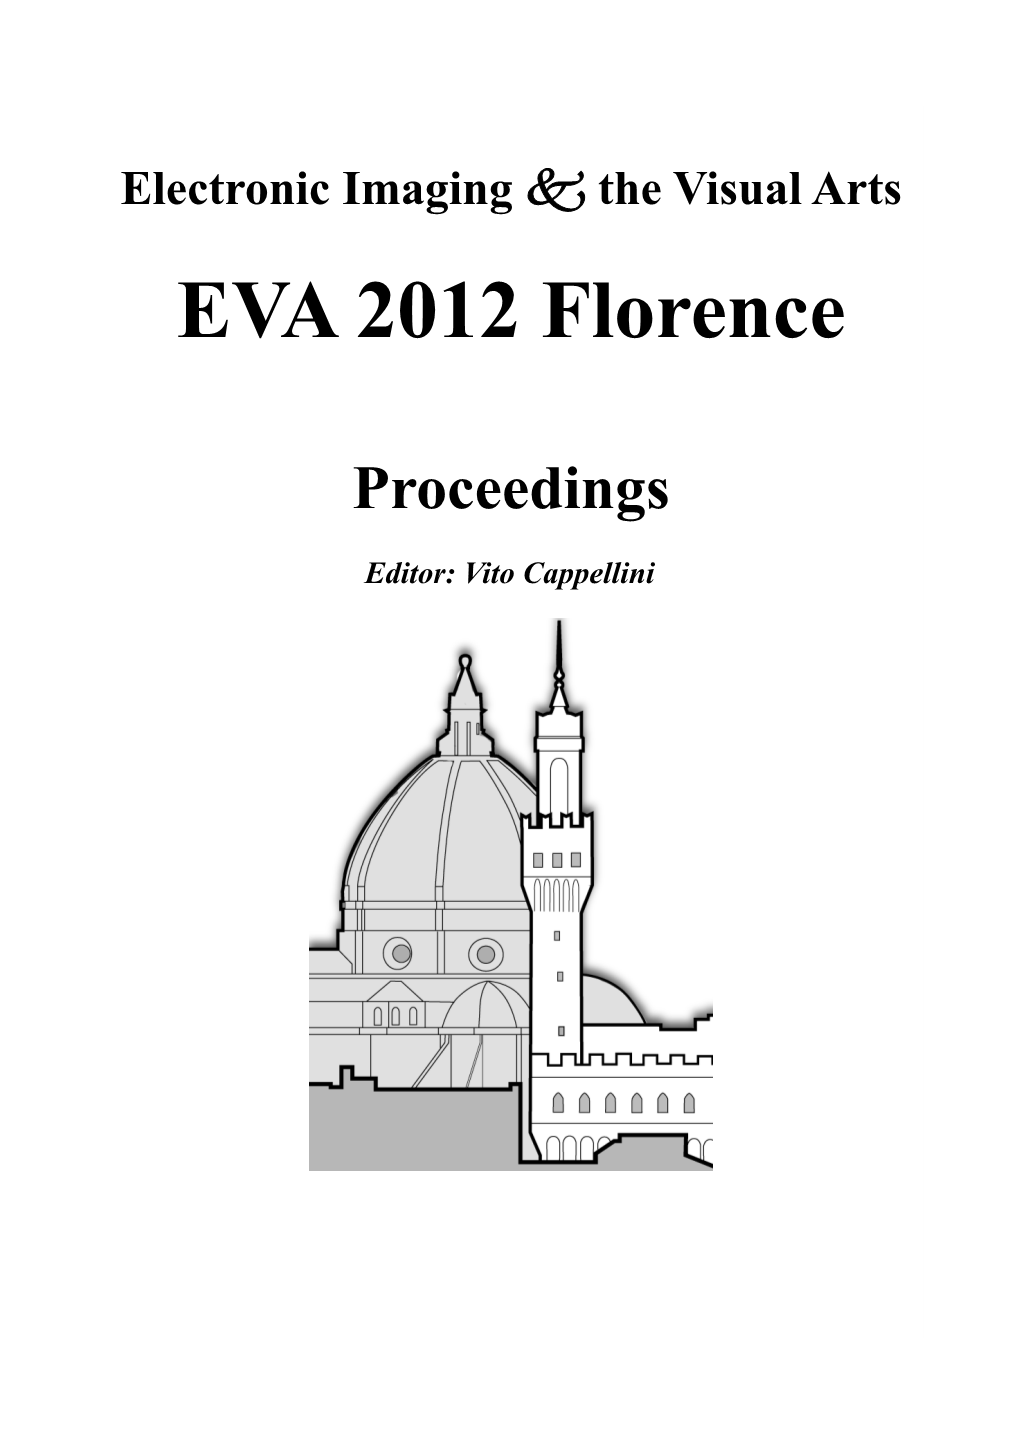 EVA 2012 Florence